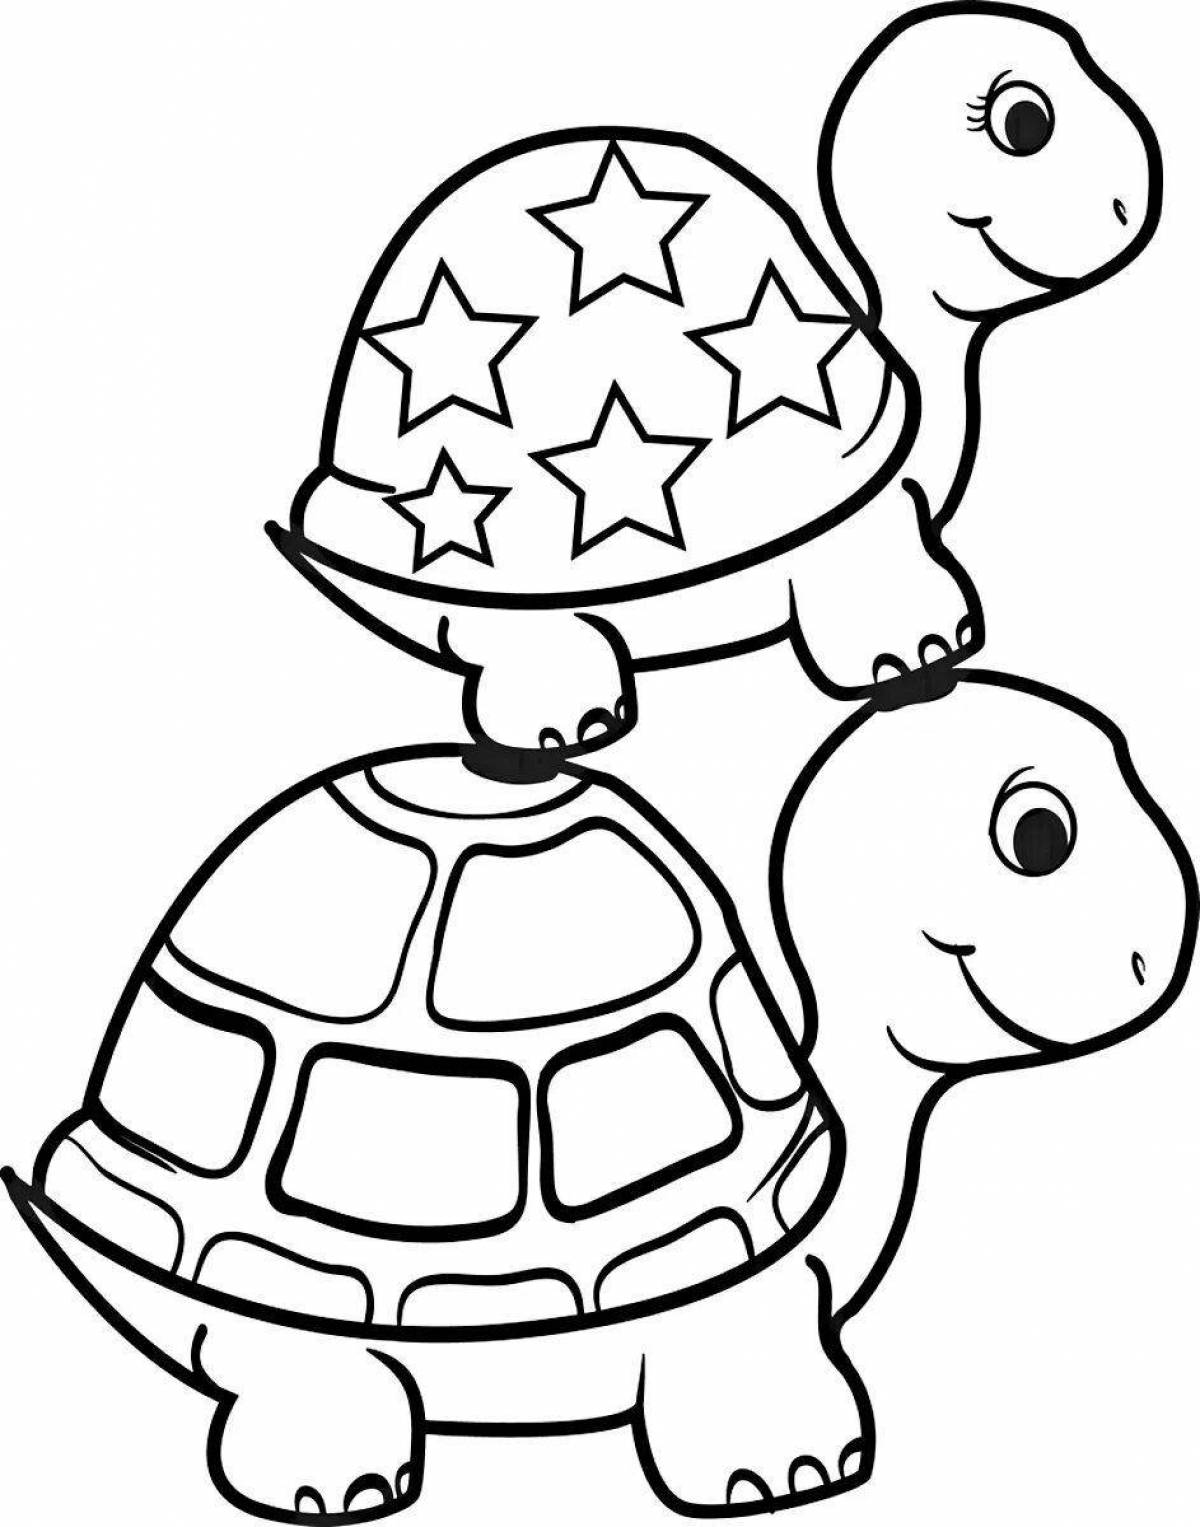 Забавная раскраска черепаха для детей